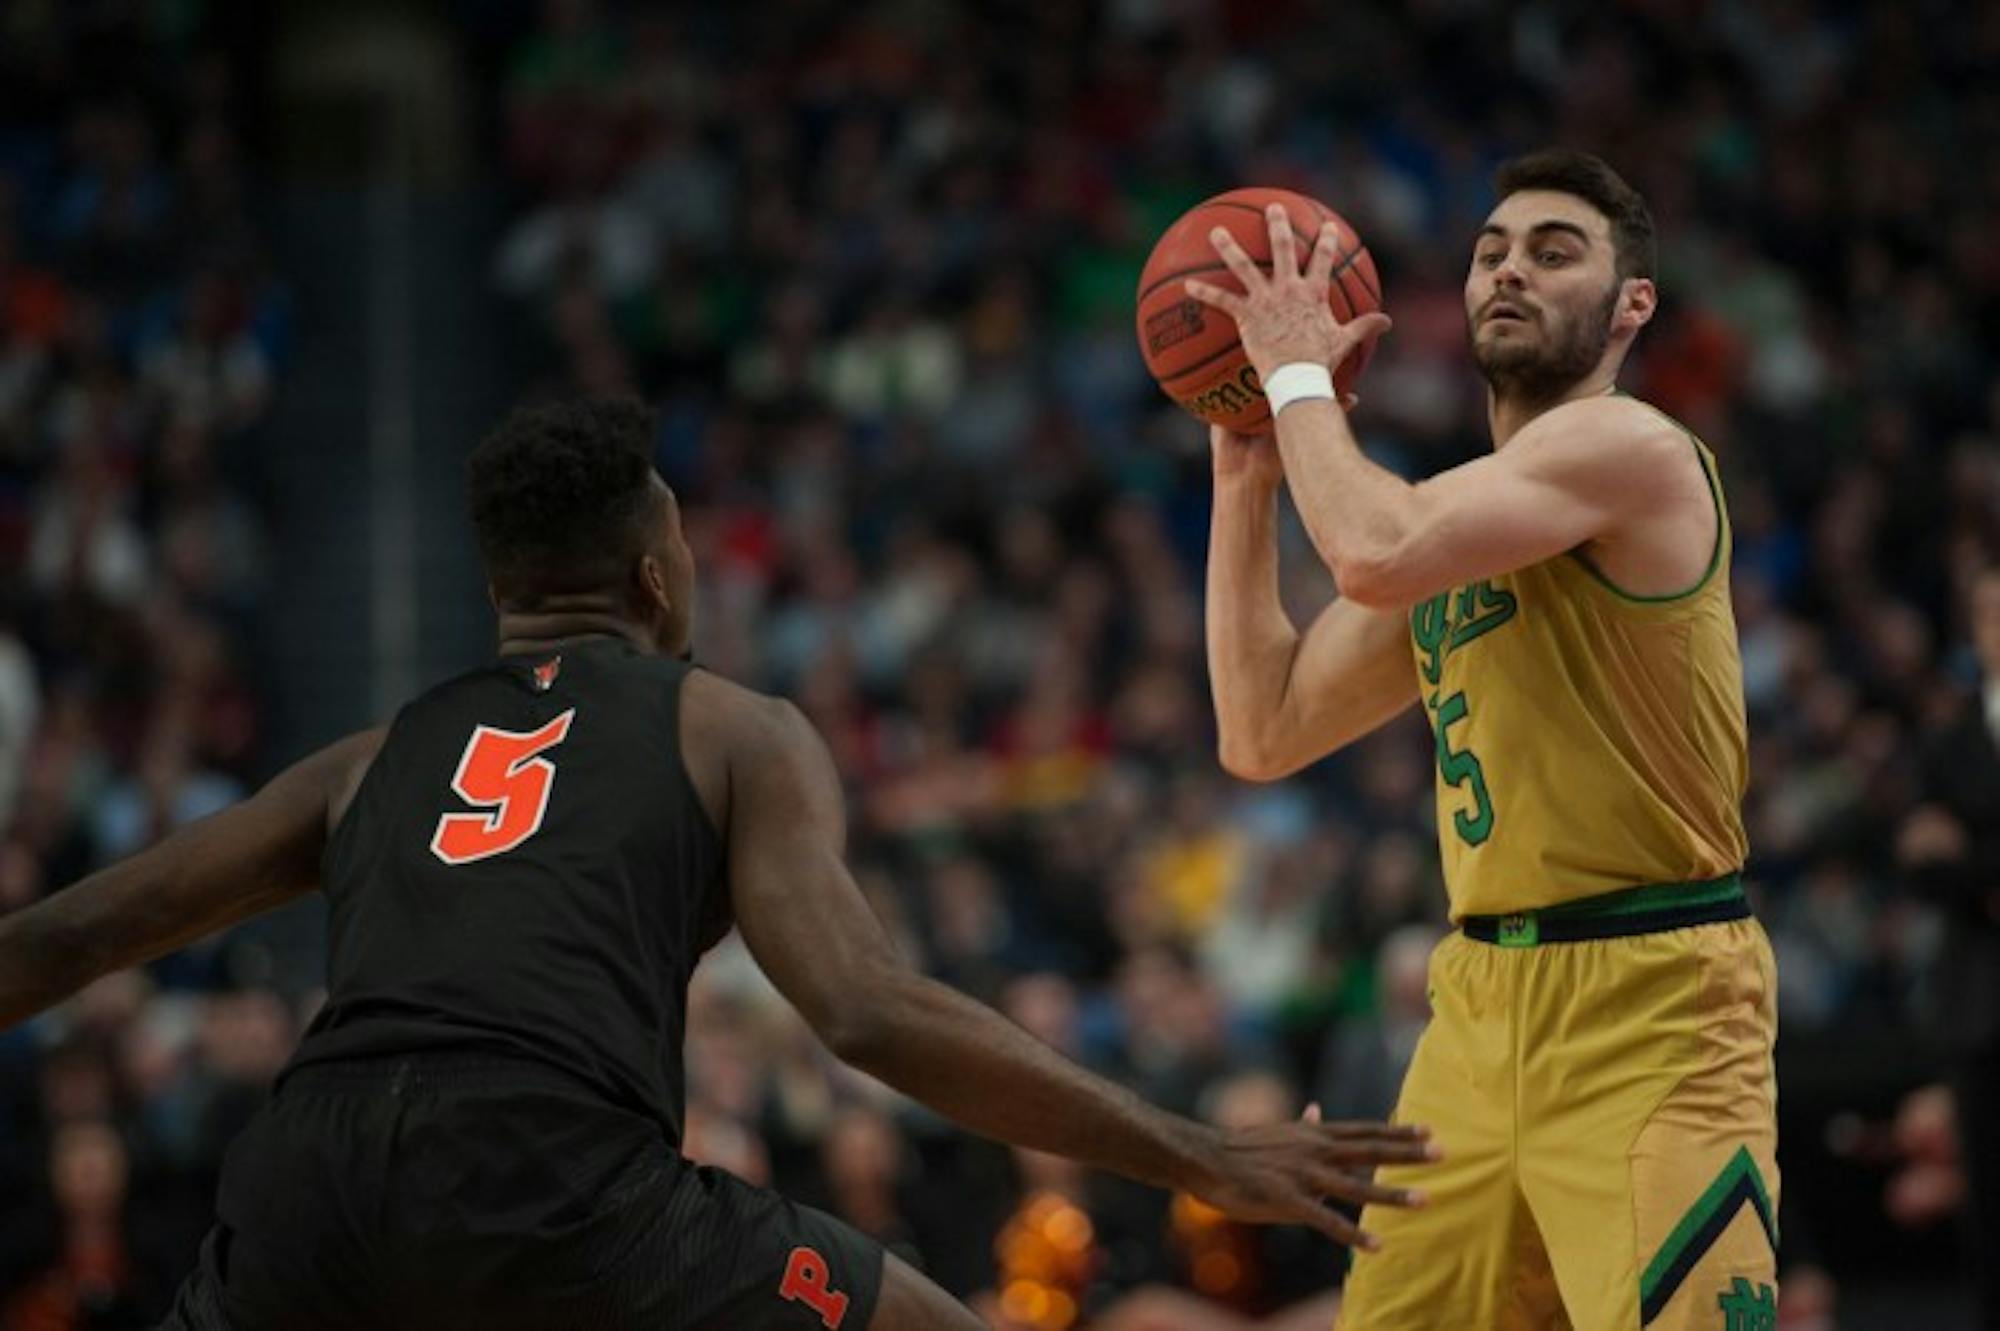 Irish junior guard Matt Farrell looks to pass during Notre Dame’s 60-58 win over Princeton on Thursday at Buffalo, New York’s KeyBank Center.